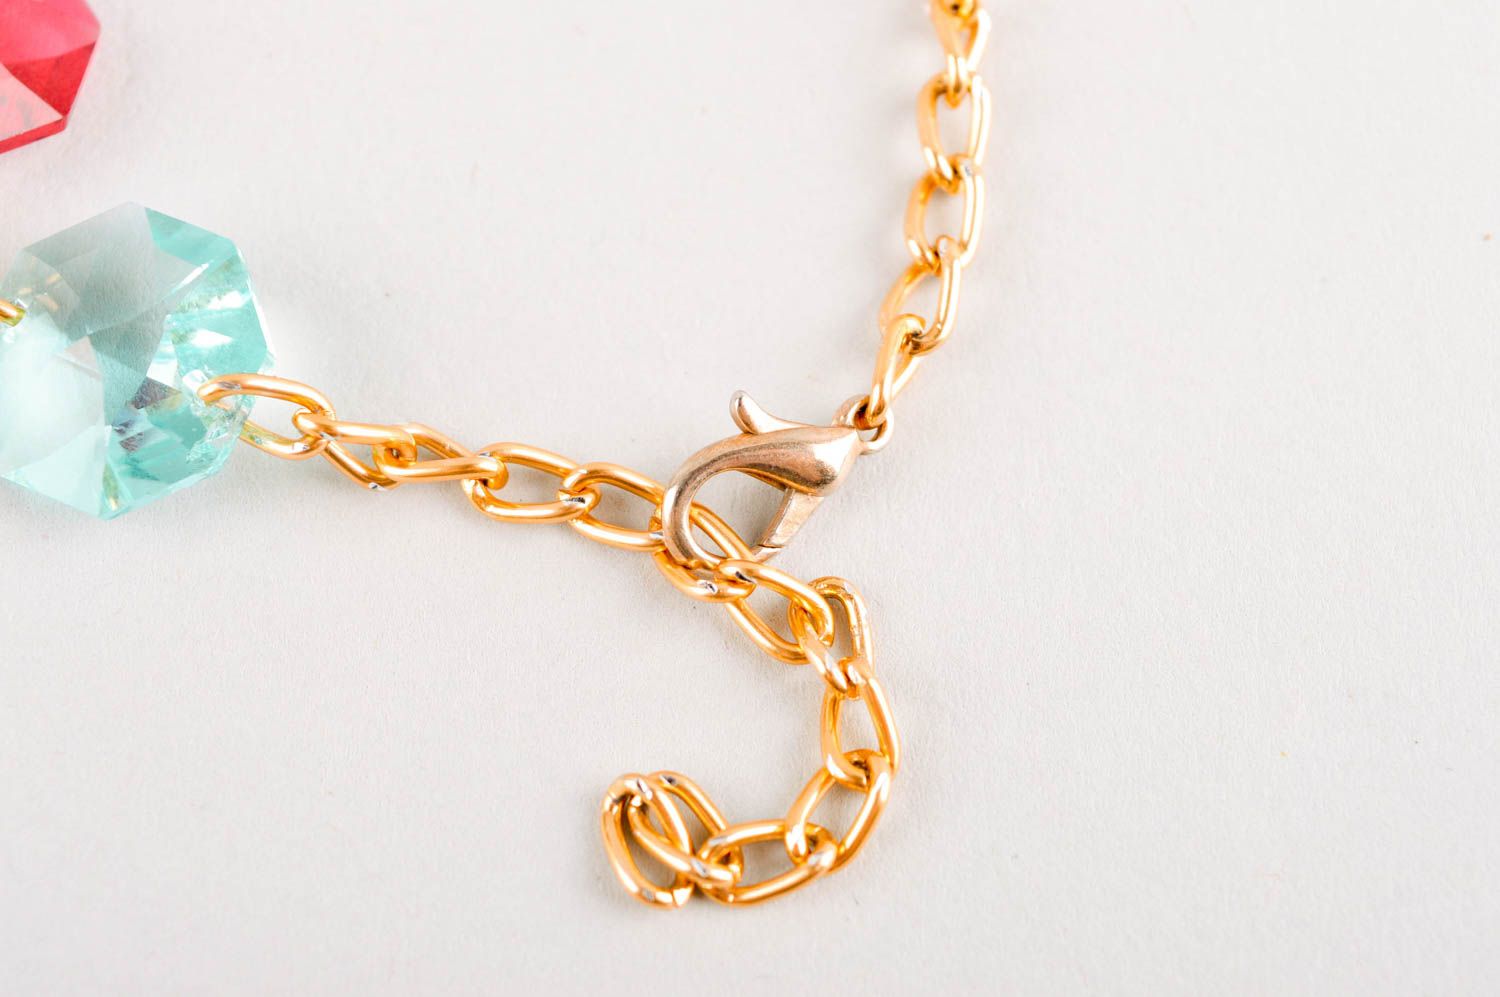 Handmade bracelet designer accessory beaded jewelry unusual bracelet gift ideas photo 4